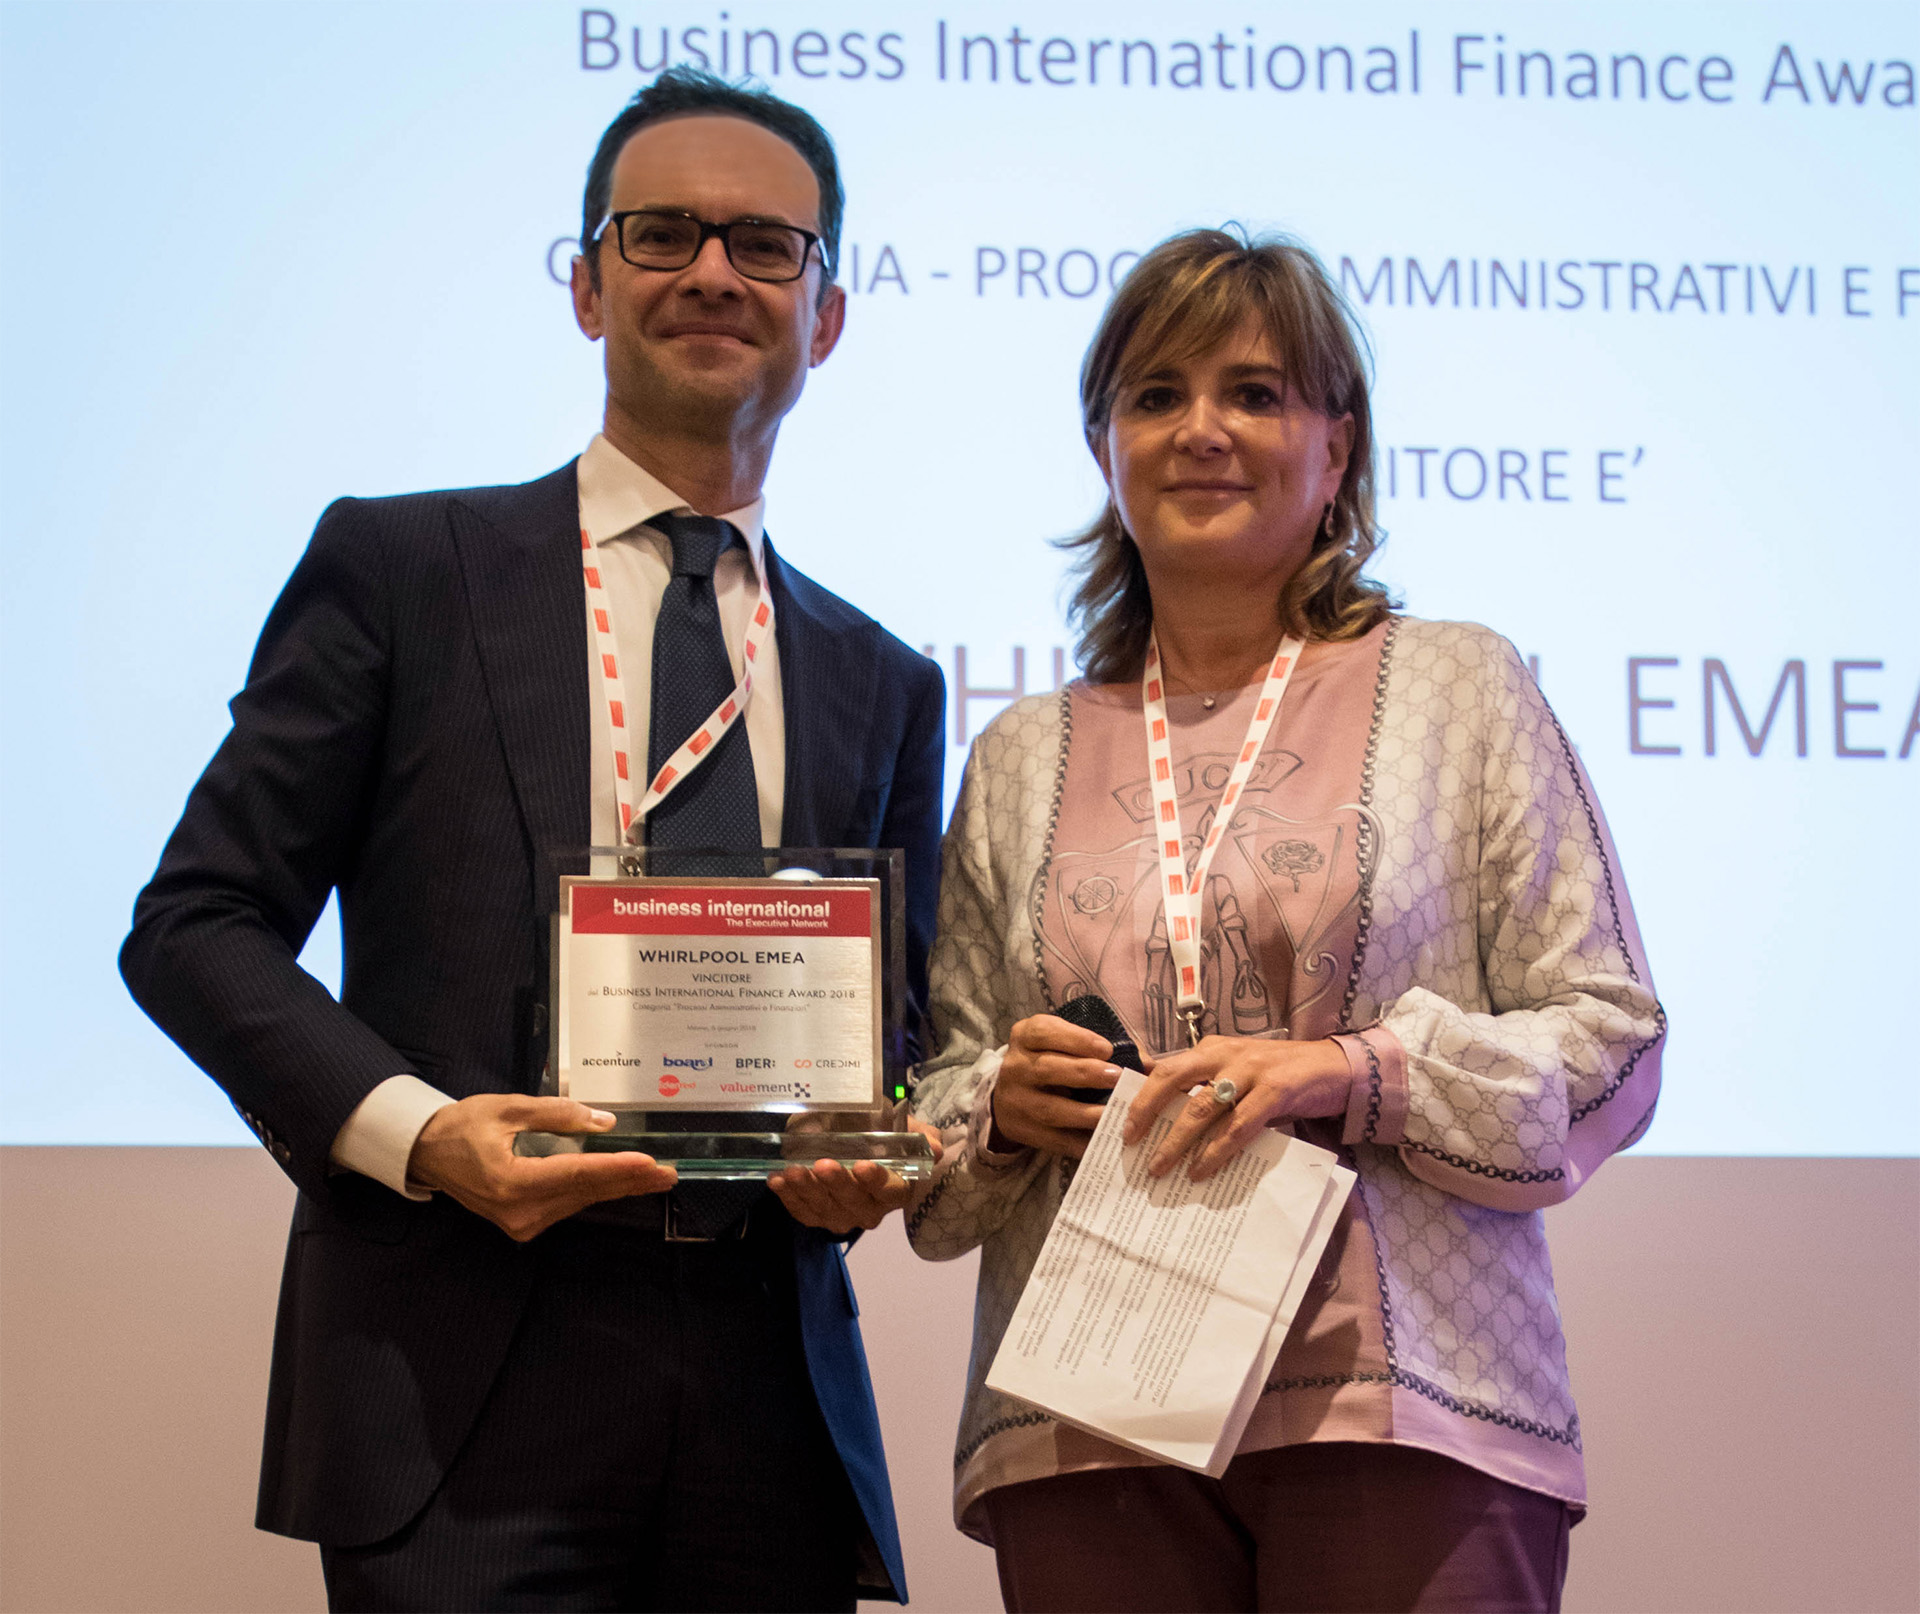 Marco Fossataro - International Business Award